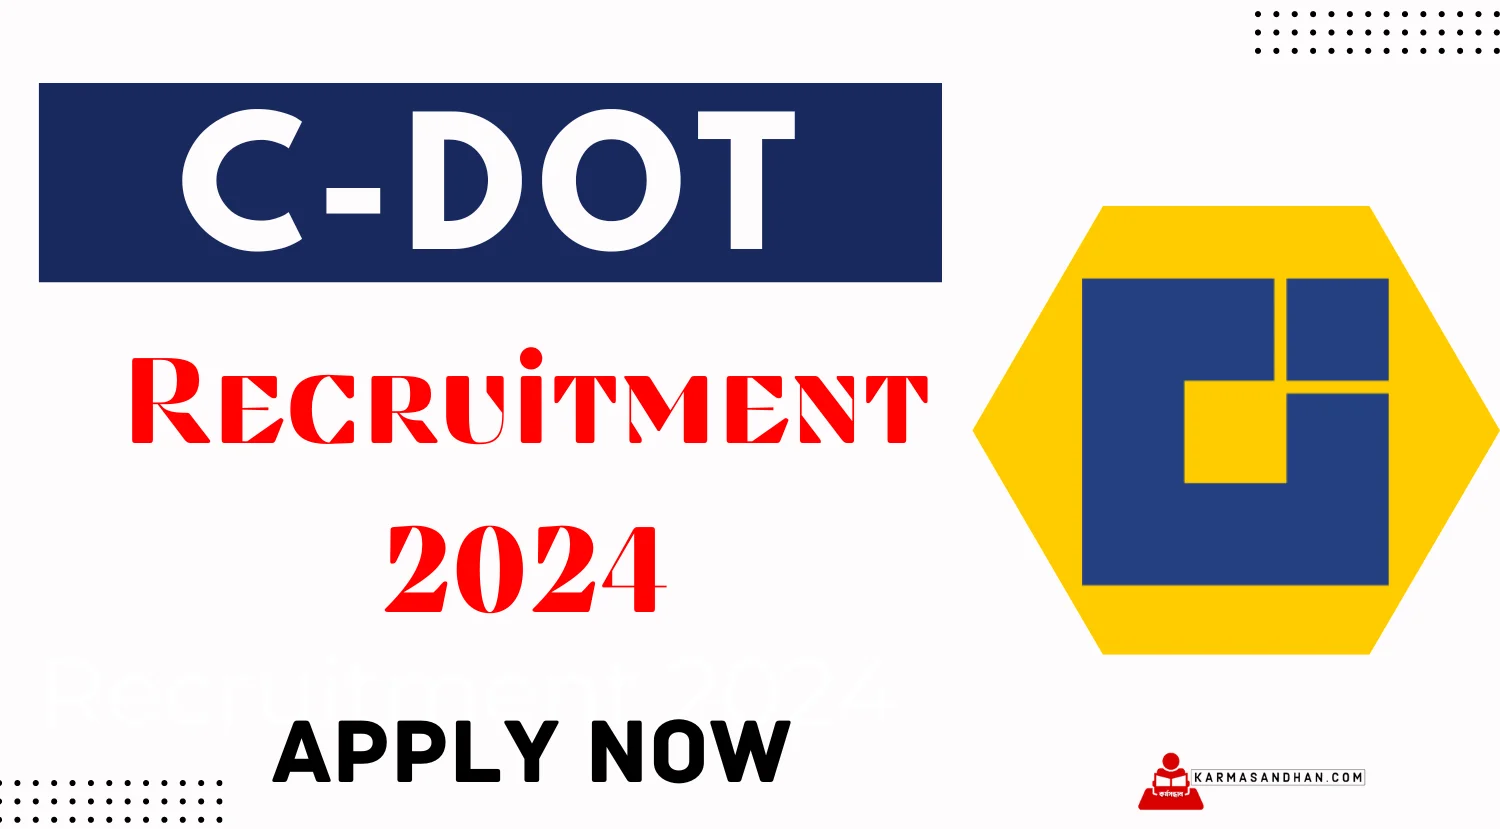 C-DOT Engineer Recruitment 2024